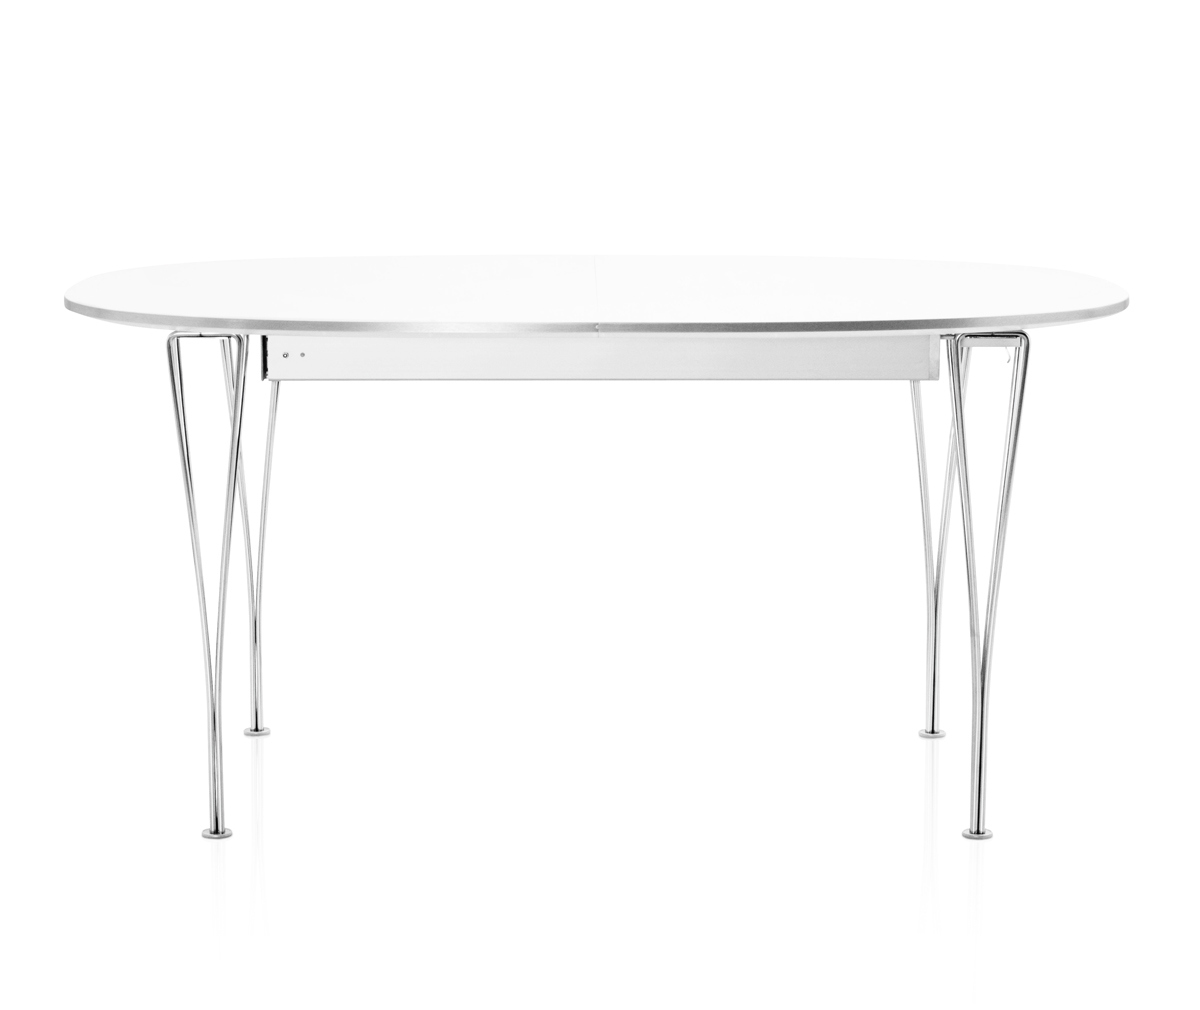 Fritz Hansen Extendable Dining Table B620, “Superellipse” White/Chrome, 100 x 170/270 cm